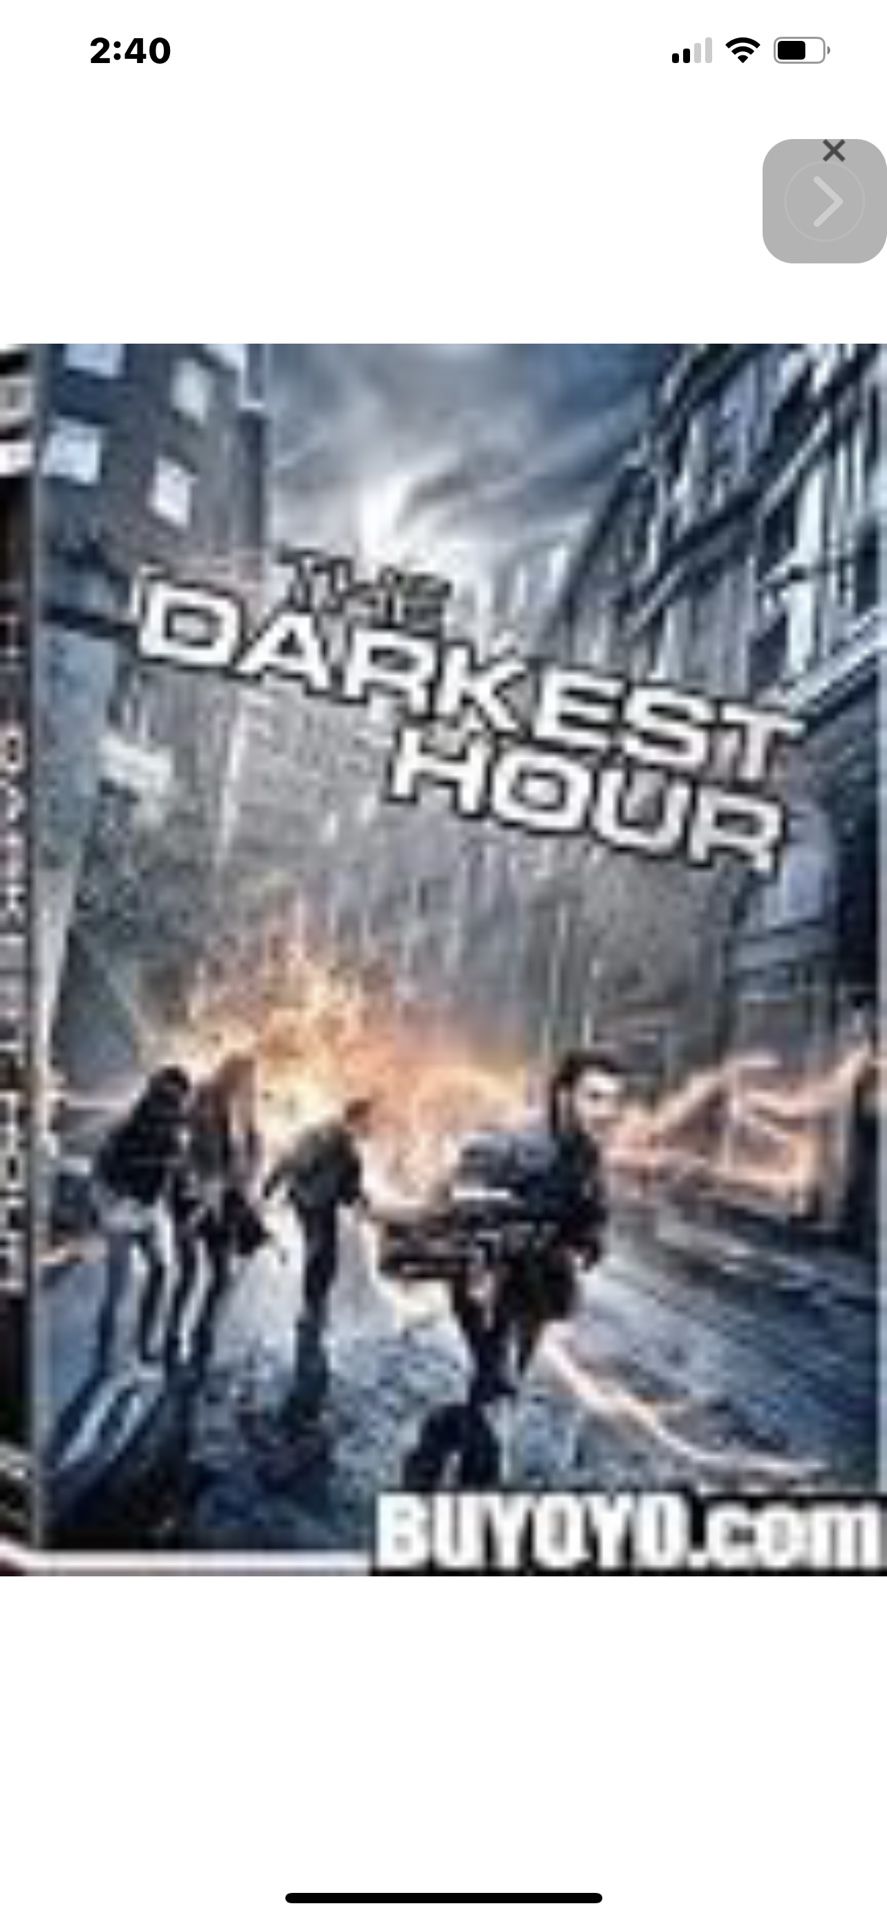 The Darkest Hour 3D Blu-ray 